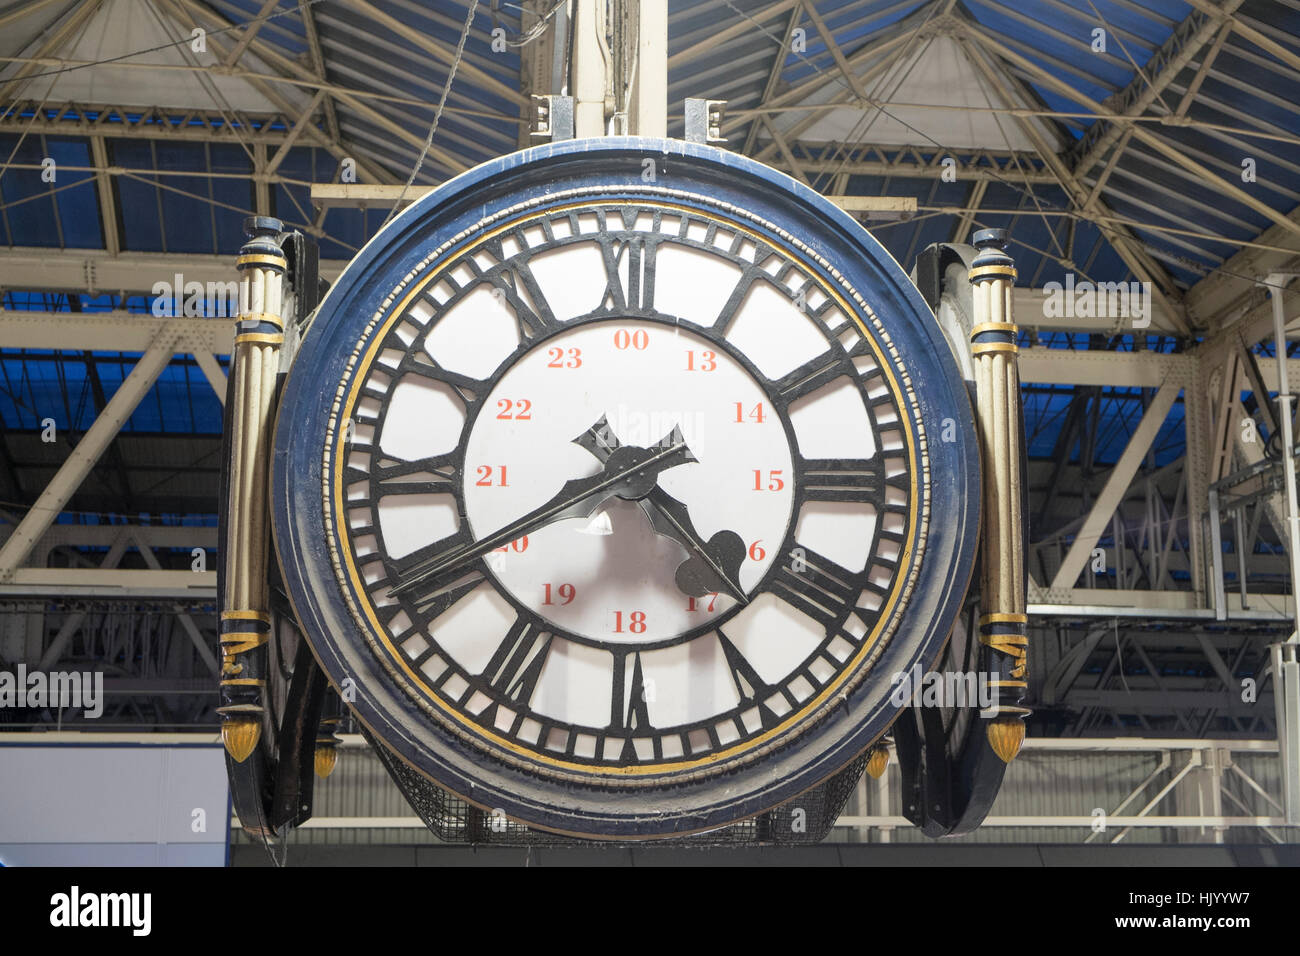 Famous clock at London Waterloo railway station,England Stock Photo